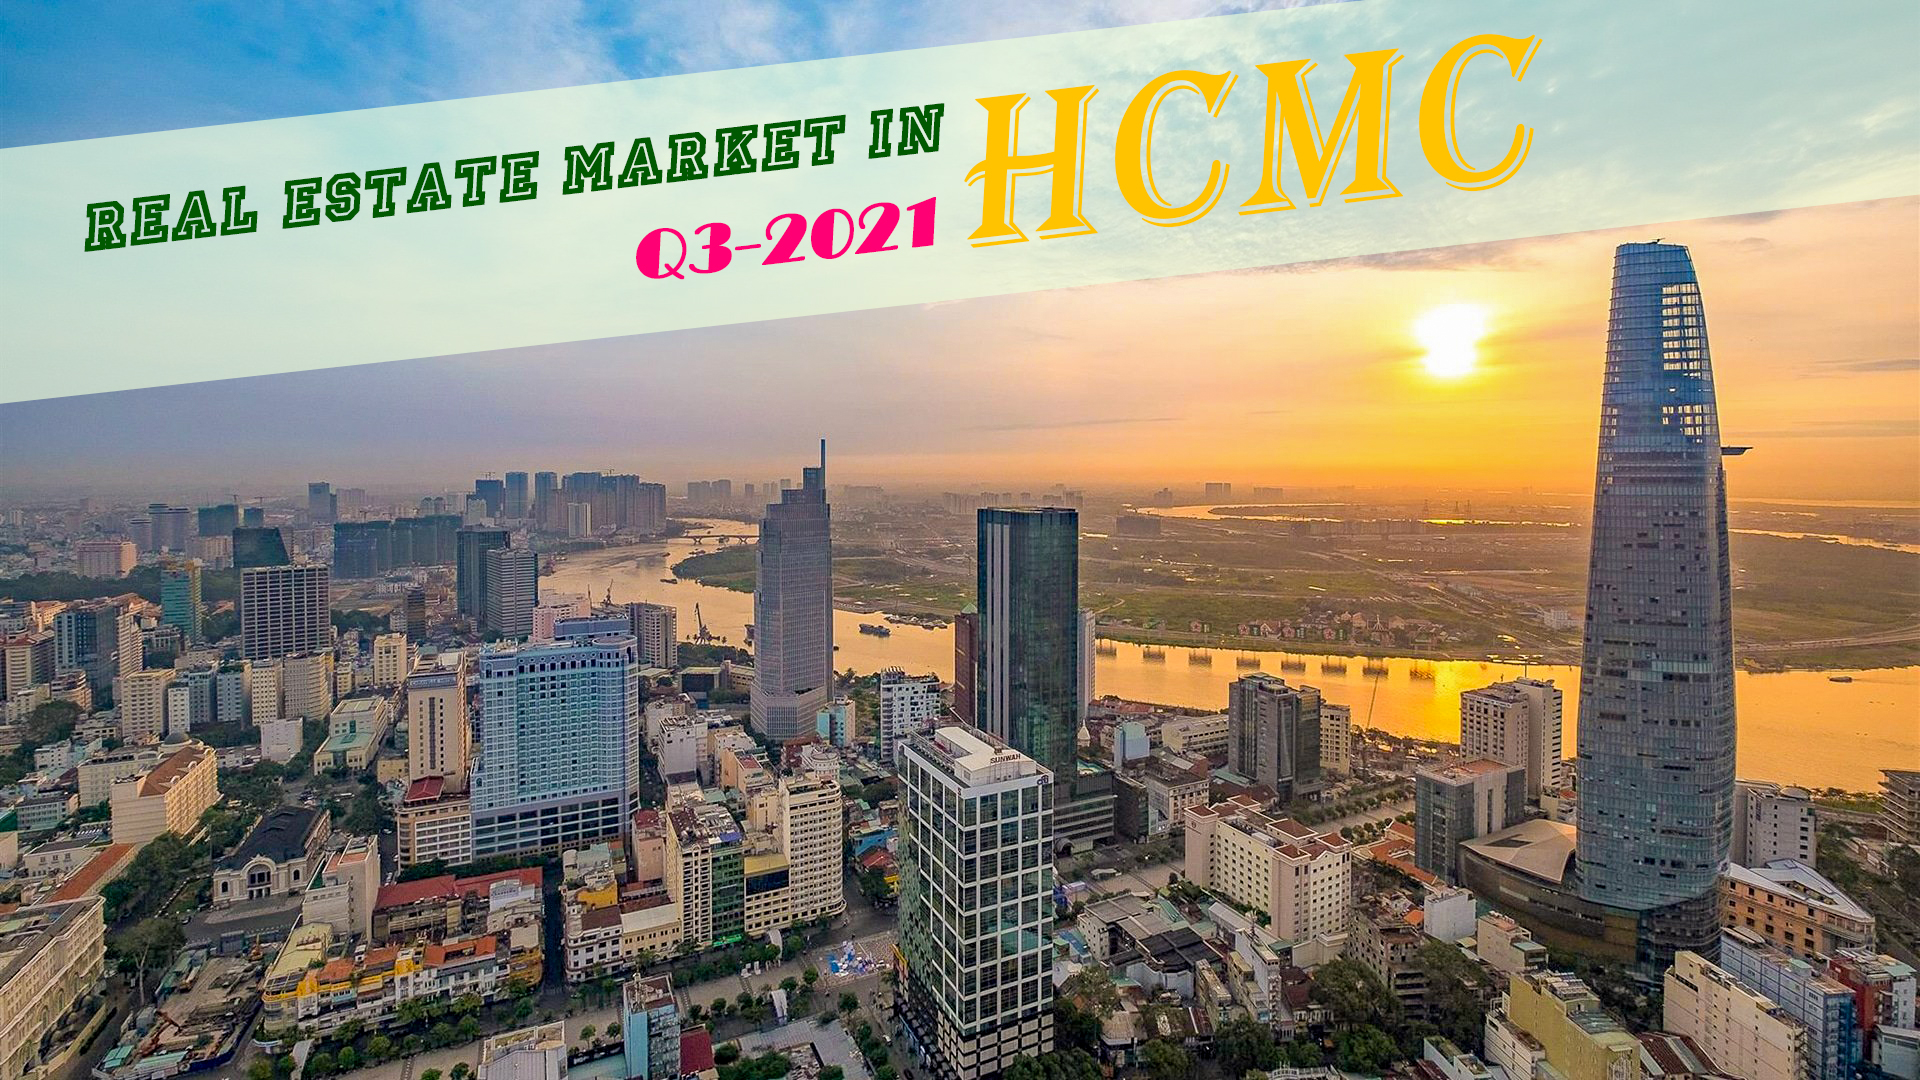 Real estate market in HCMC – Q3 2021